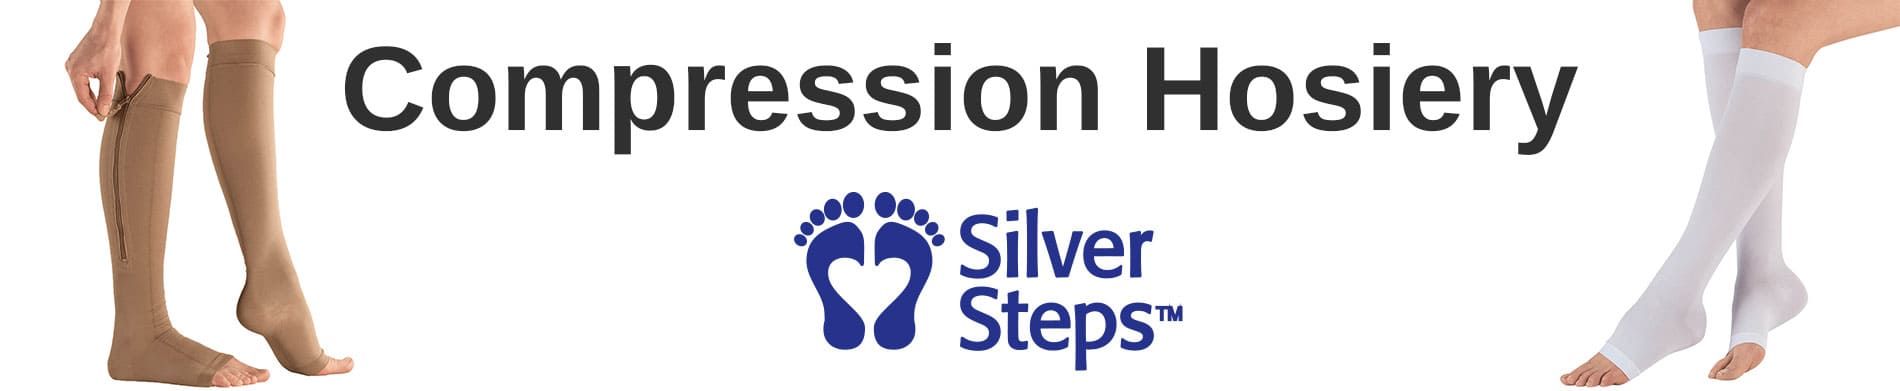 Compression Hosiery by Silver Steps